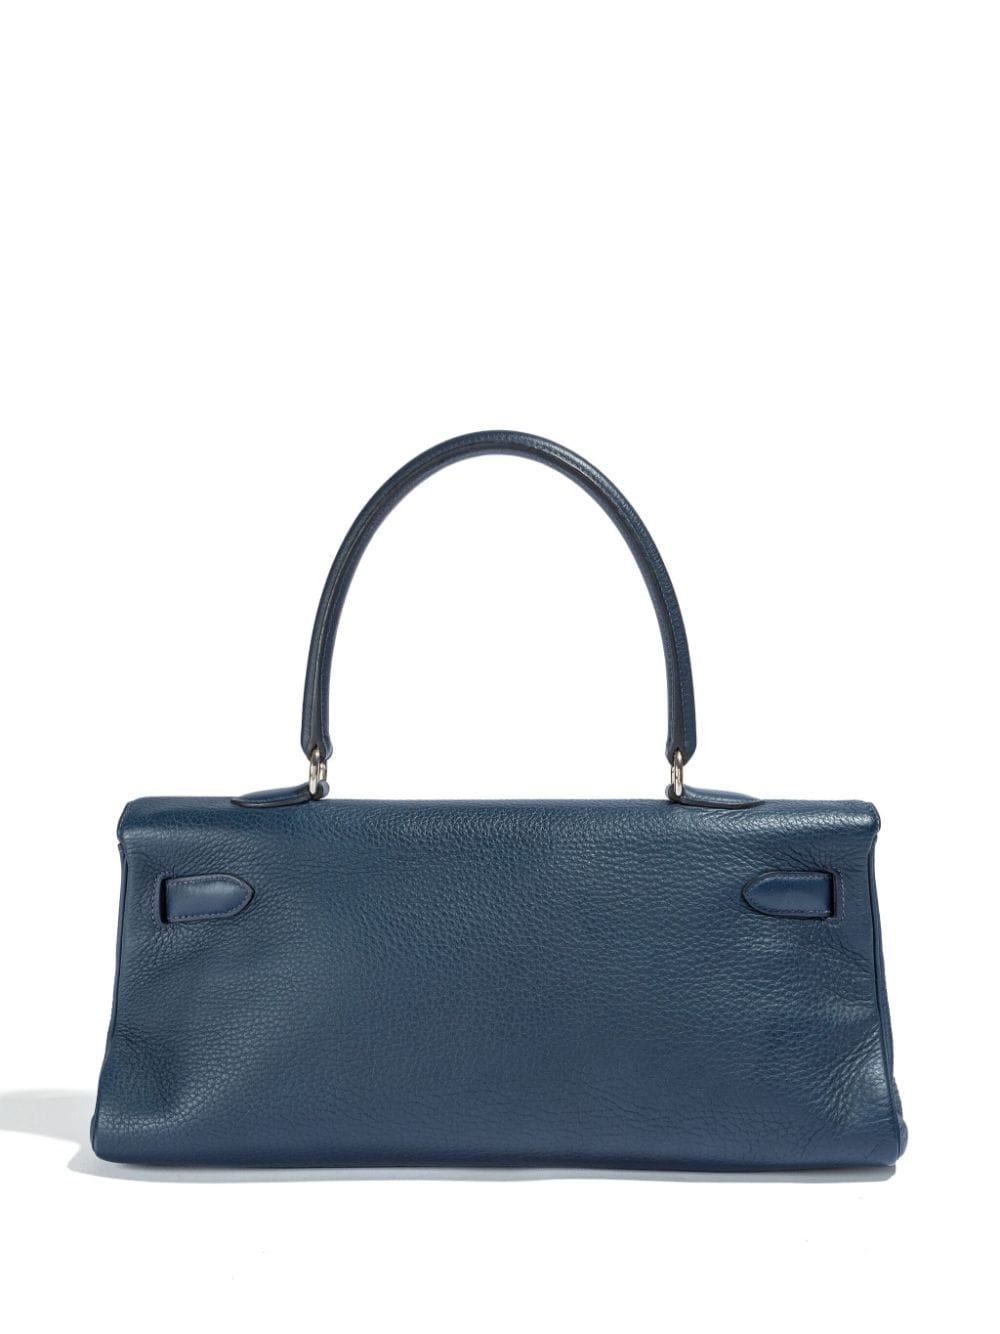 Hermès Pre-Owned Kelly fringed handbag - Blauw